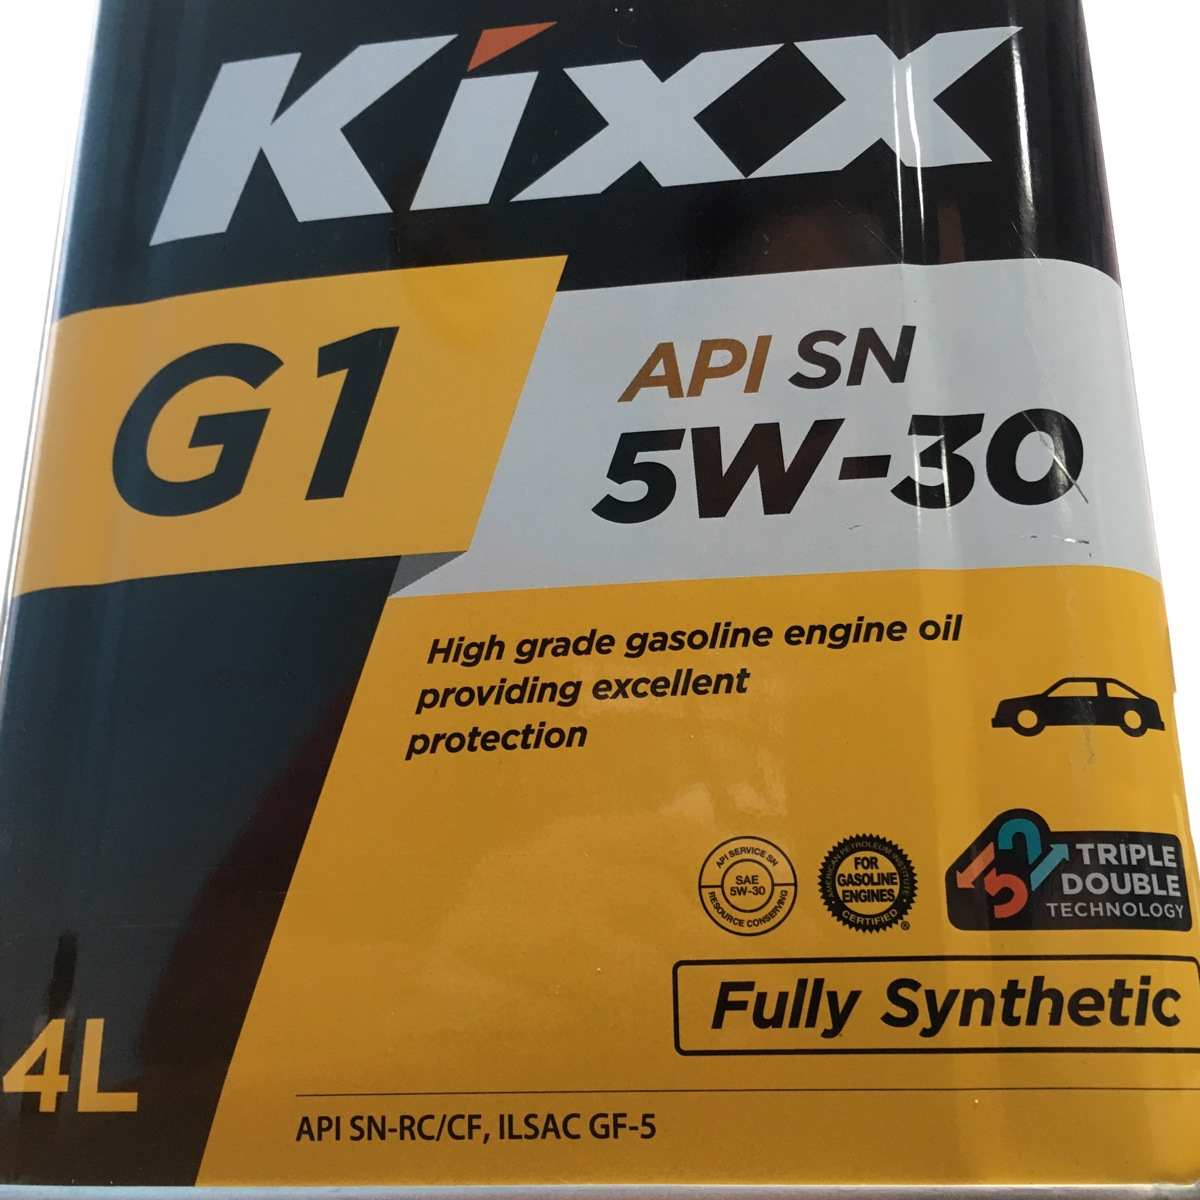 Масло kixx api sp. Kixx g1 5w-30 API SN. L531244te1 Kixx. Kixx l210144te1. Kixx g1 5w-30 API SP.